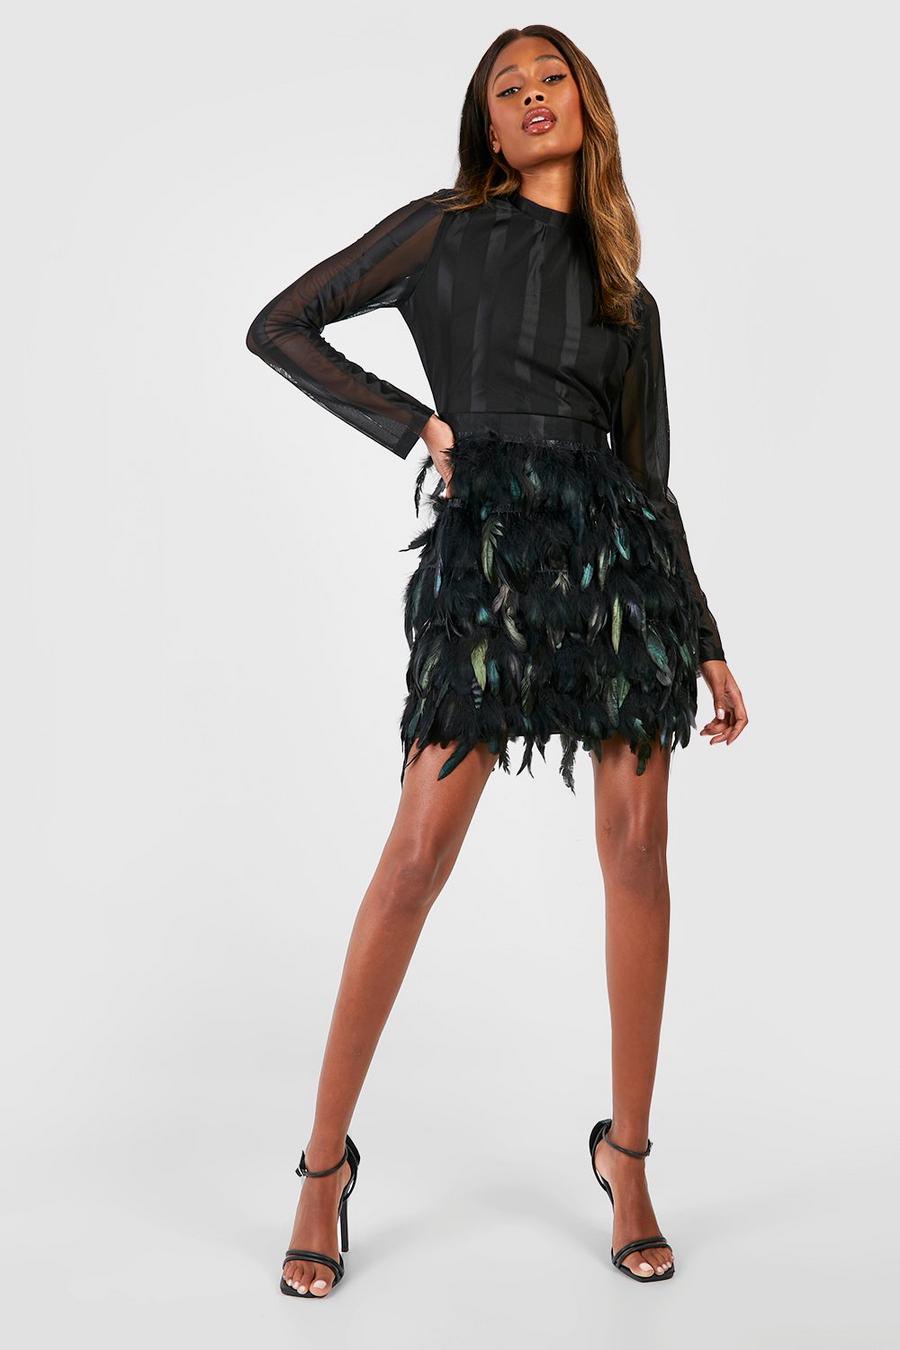 Black negro High Neck Feather Skirt Mini Party Dress